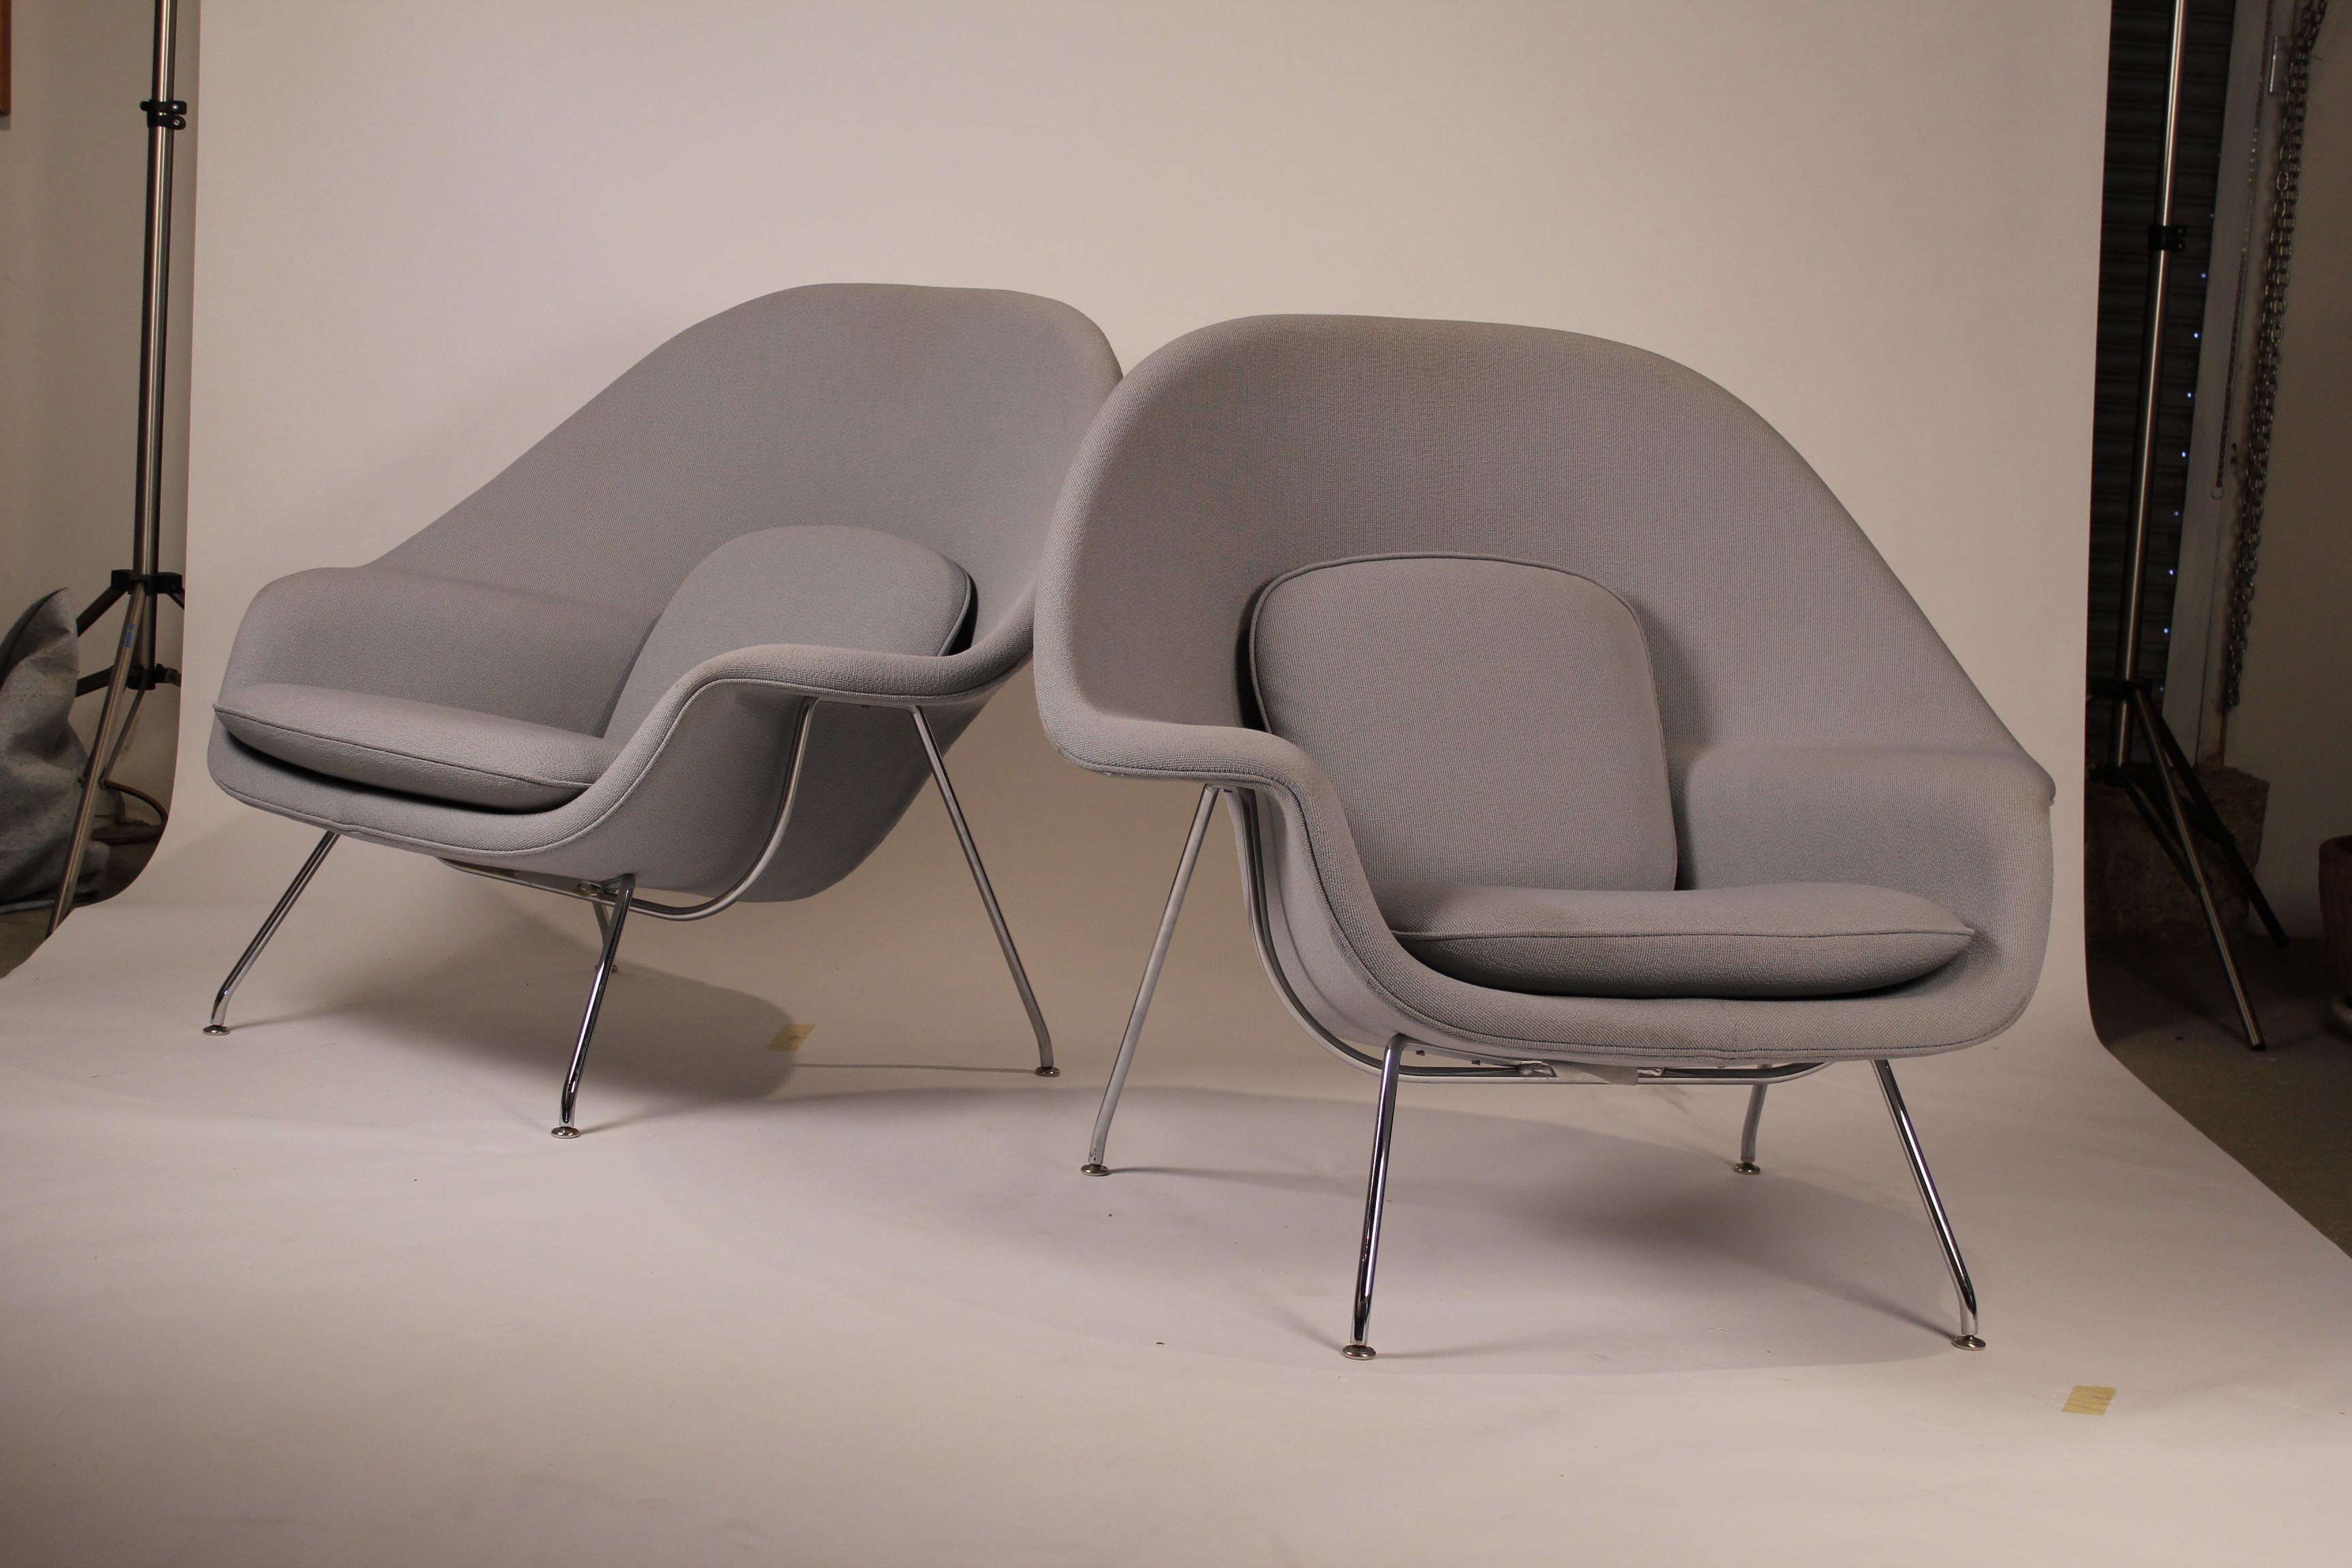 Pair of Knoll Womb Chairs designed by Eero Saarinen